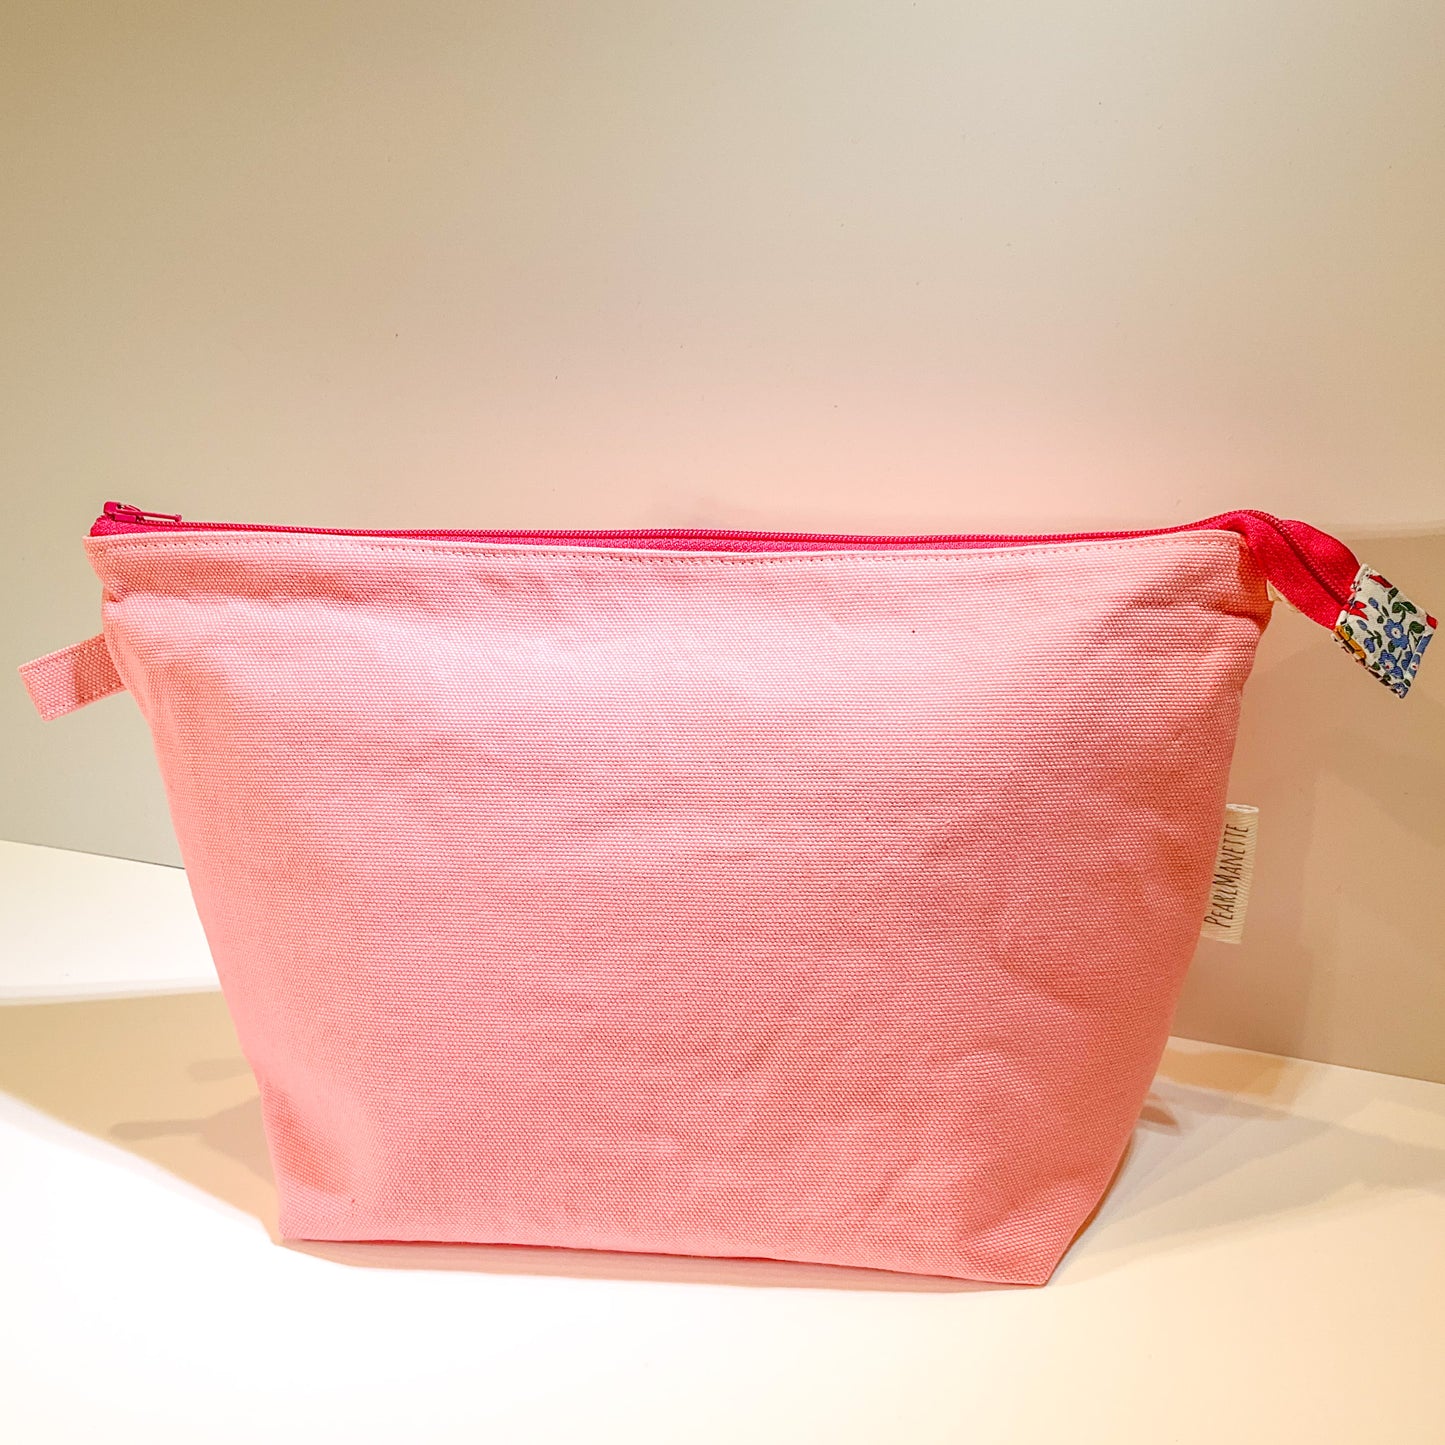 Esme Project Bag - Medium - Big Sur Pink Canvas/Liberty of London English Garden Collection